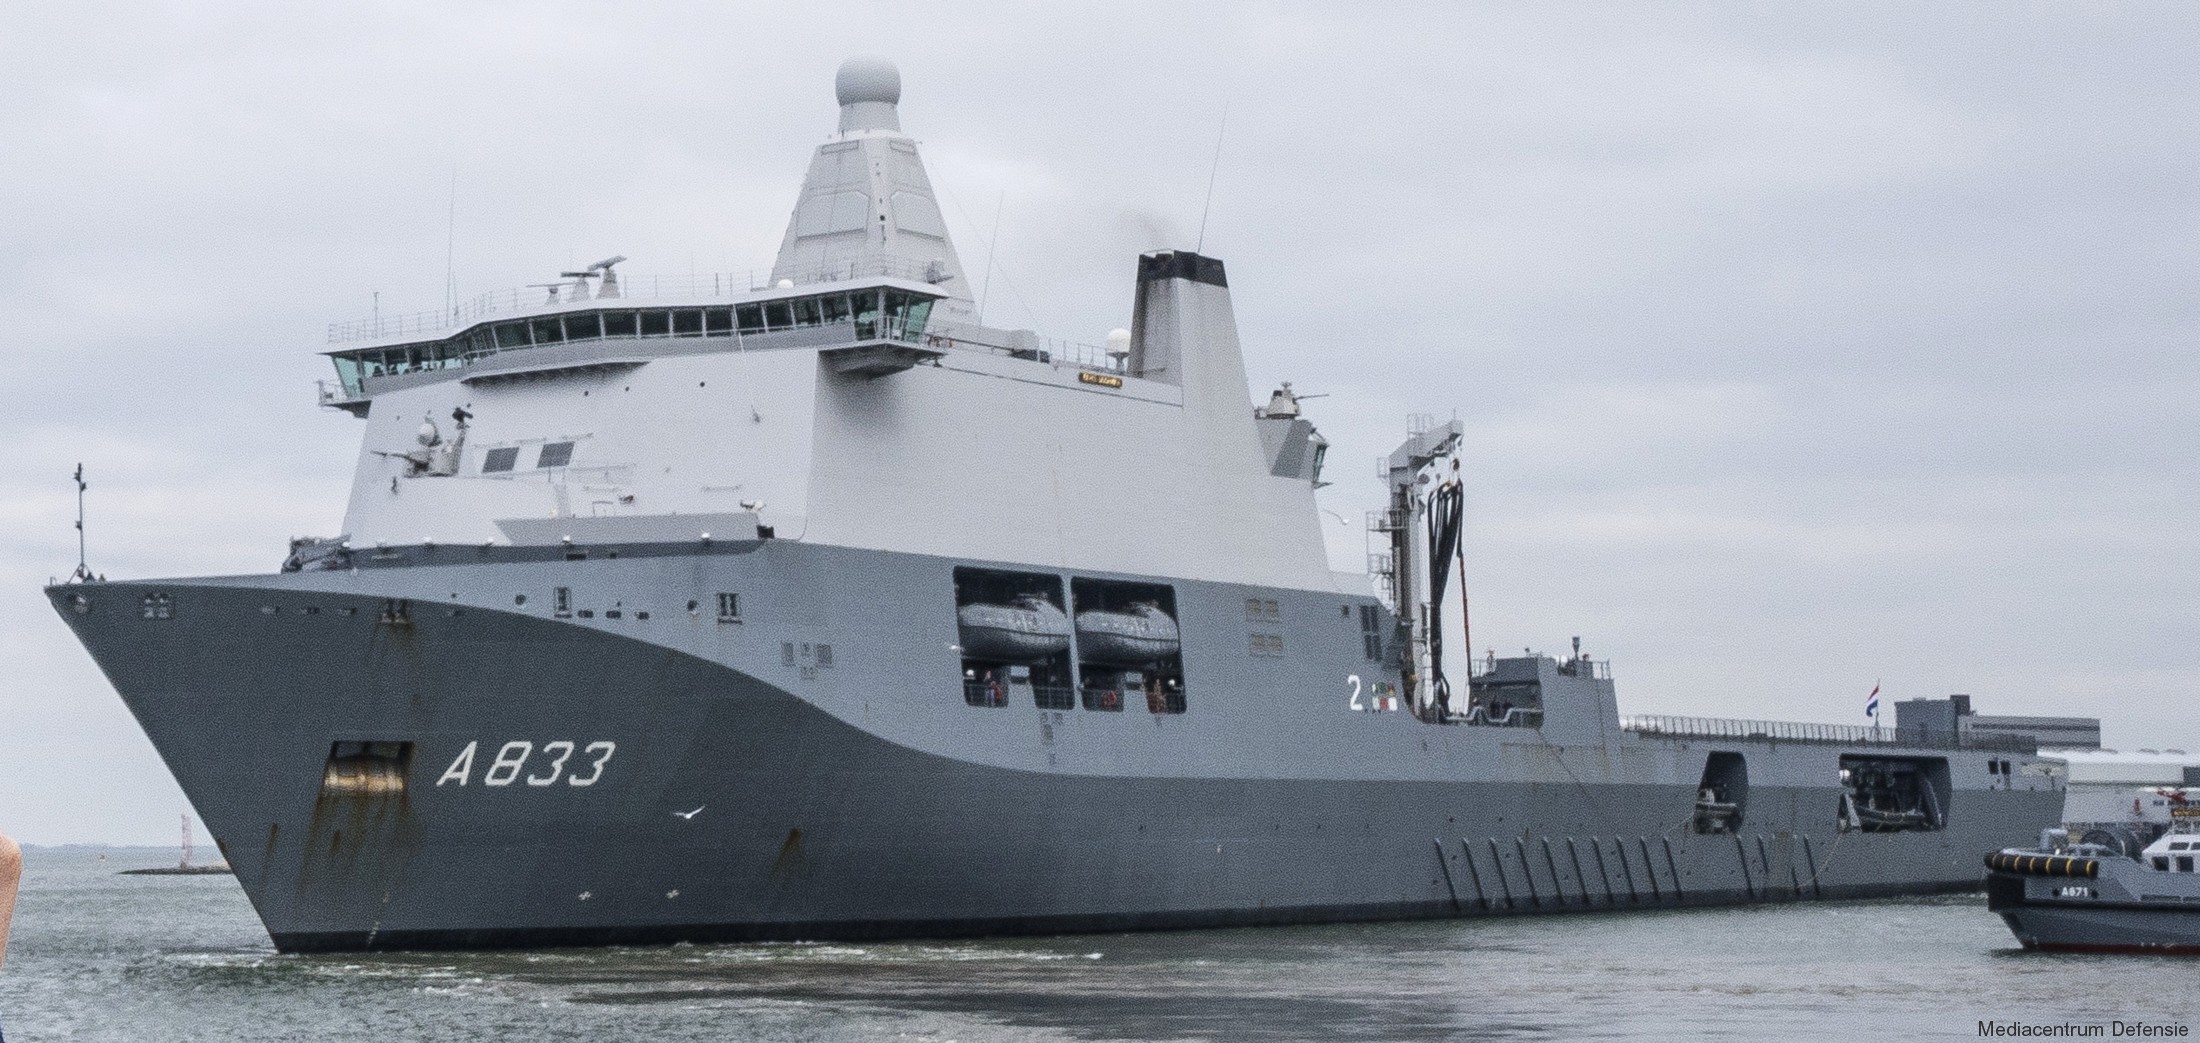 a-833 hnlms karel doorman joint support ship royal netherlands navy koninklijke marine 05